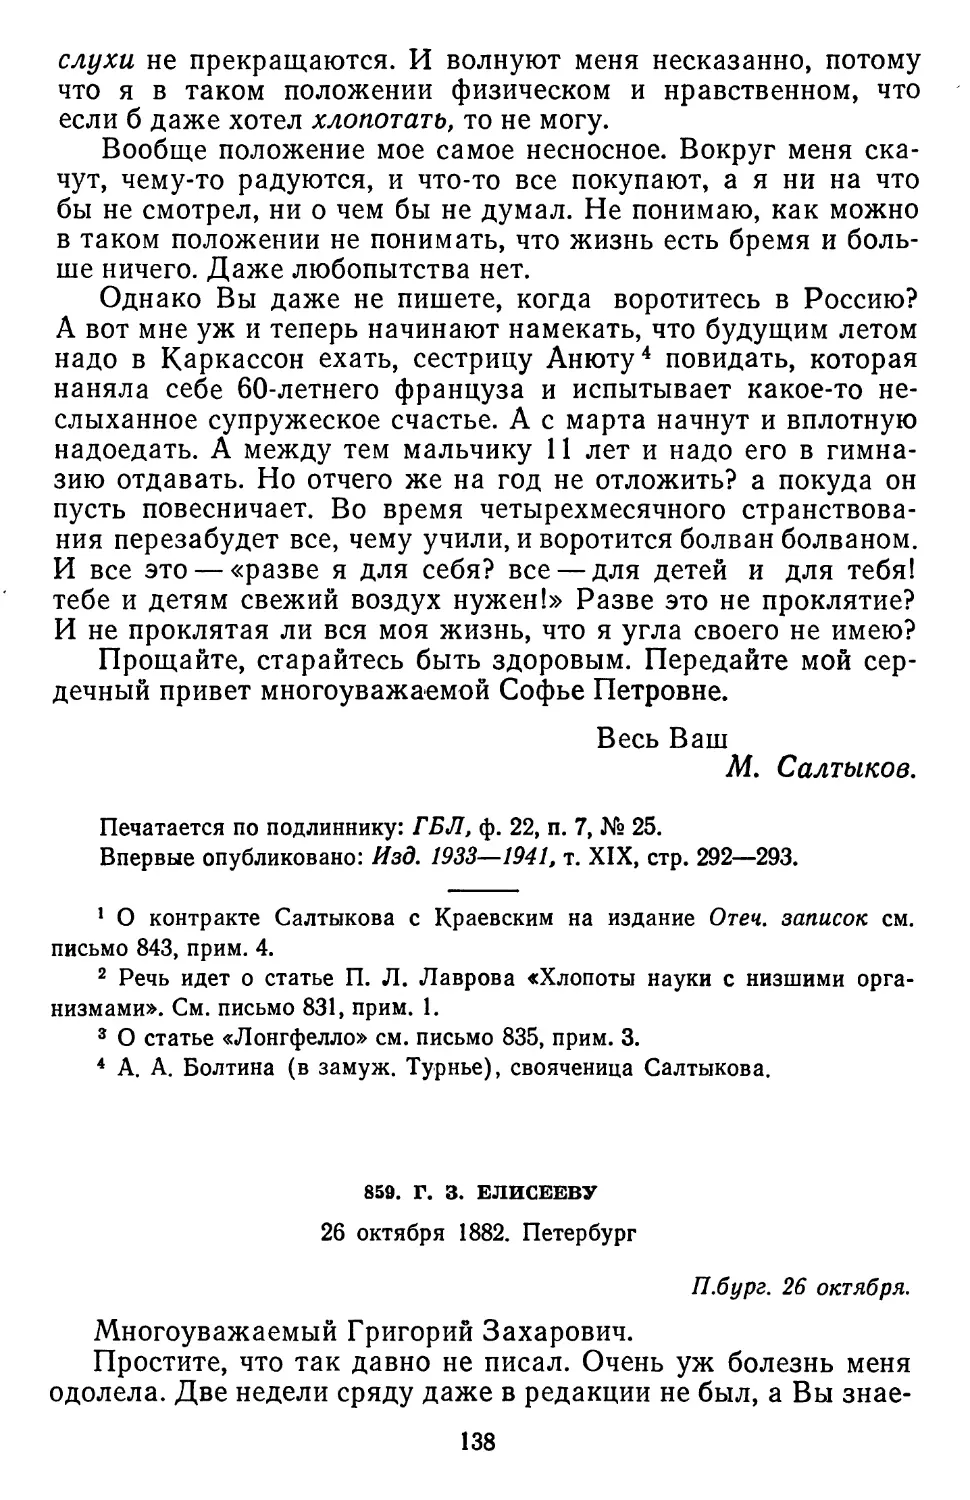 859.Г. 3. Елисееву. 26 октября 1882. Петербург